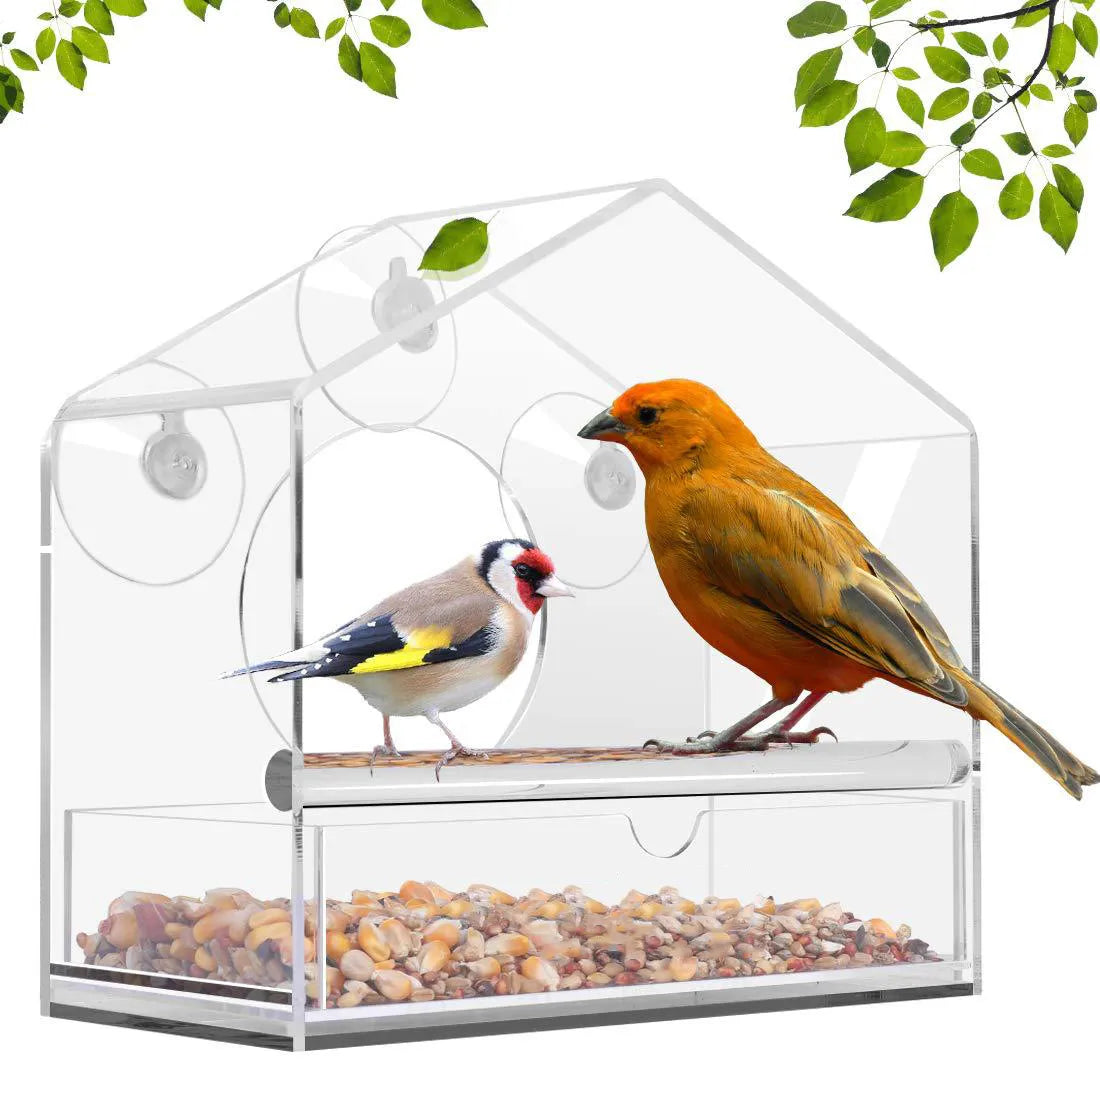 Window Bird Feeder: Up-Close Bird Watching Experience  petlums.com   